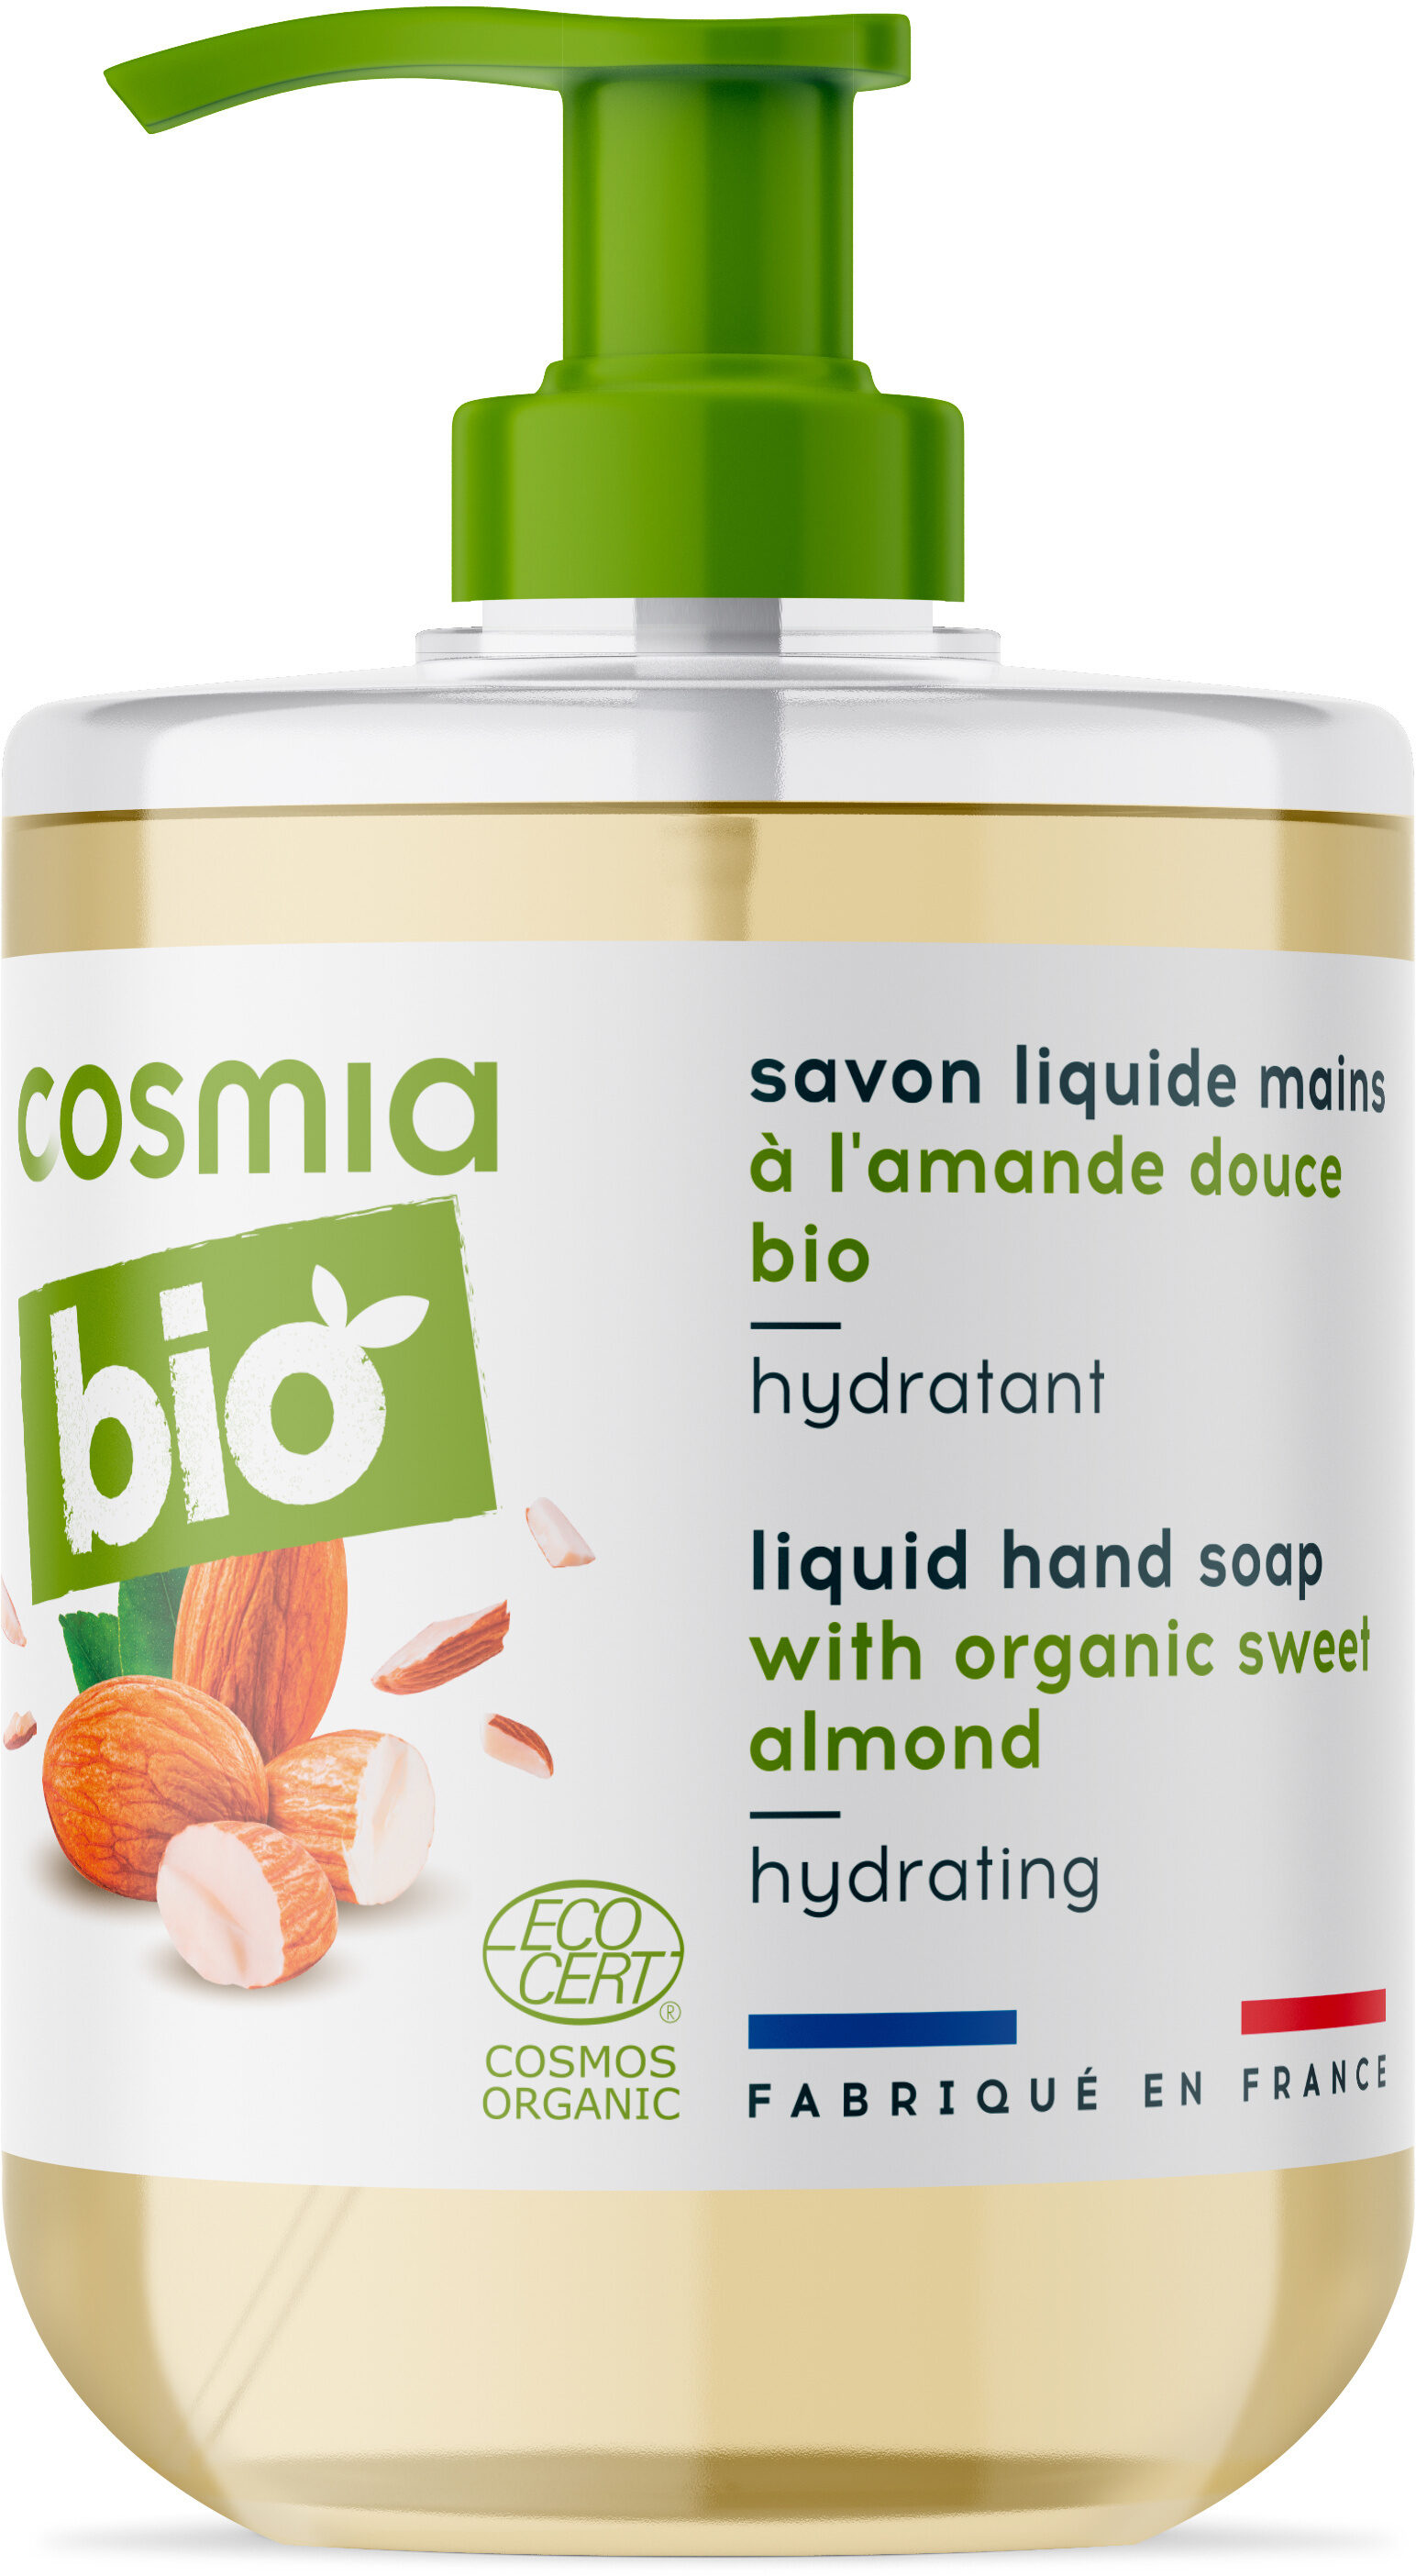 Bio savon liquide mains a l'amande douce bio - Produkt - fr